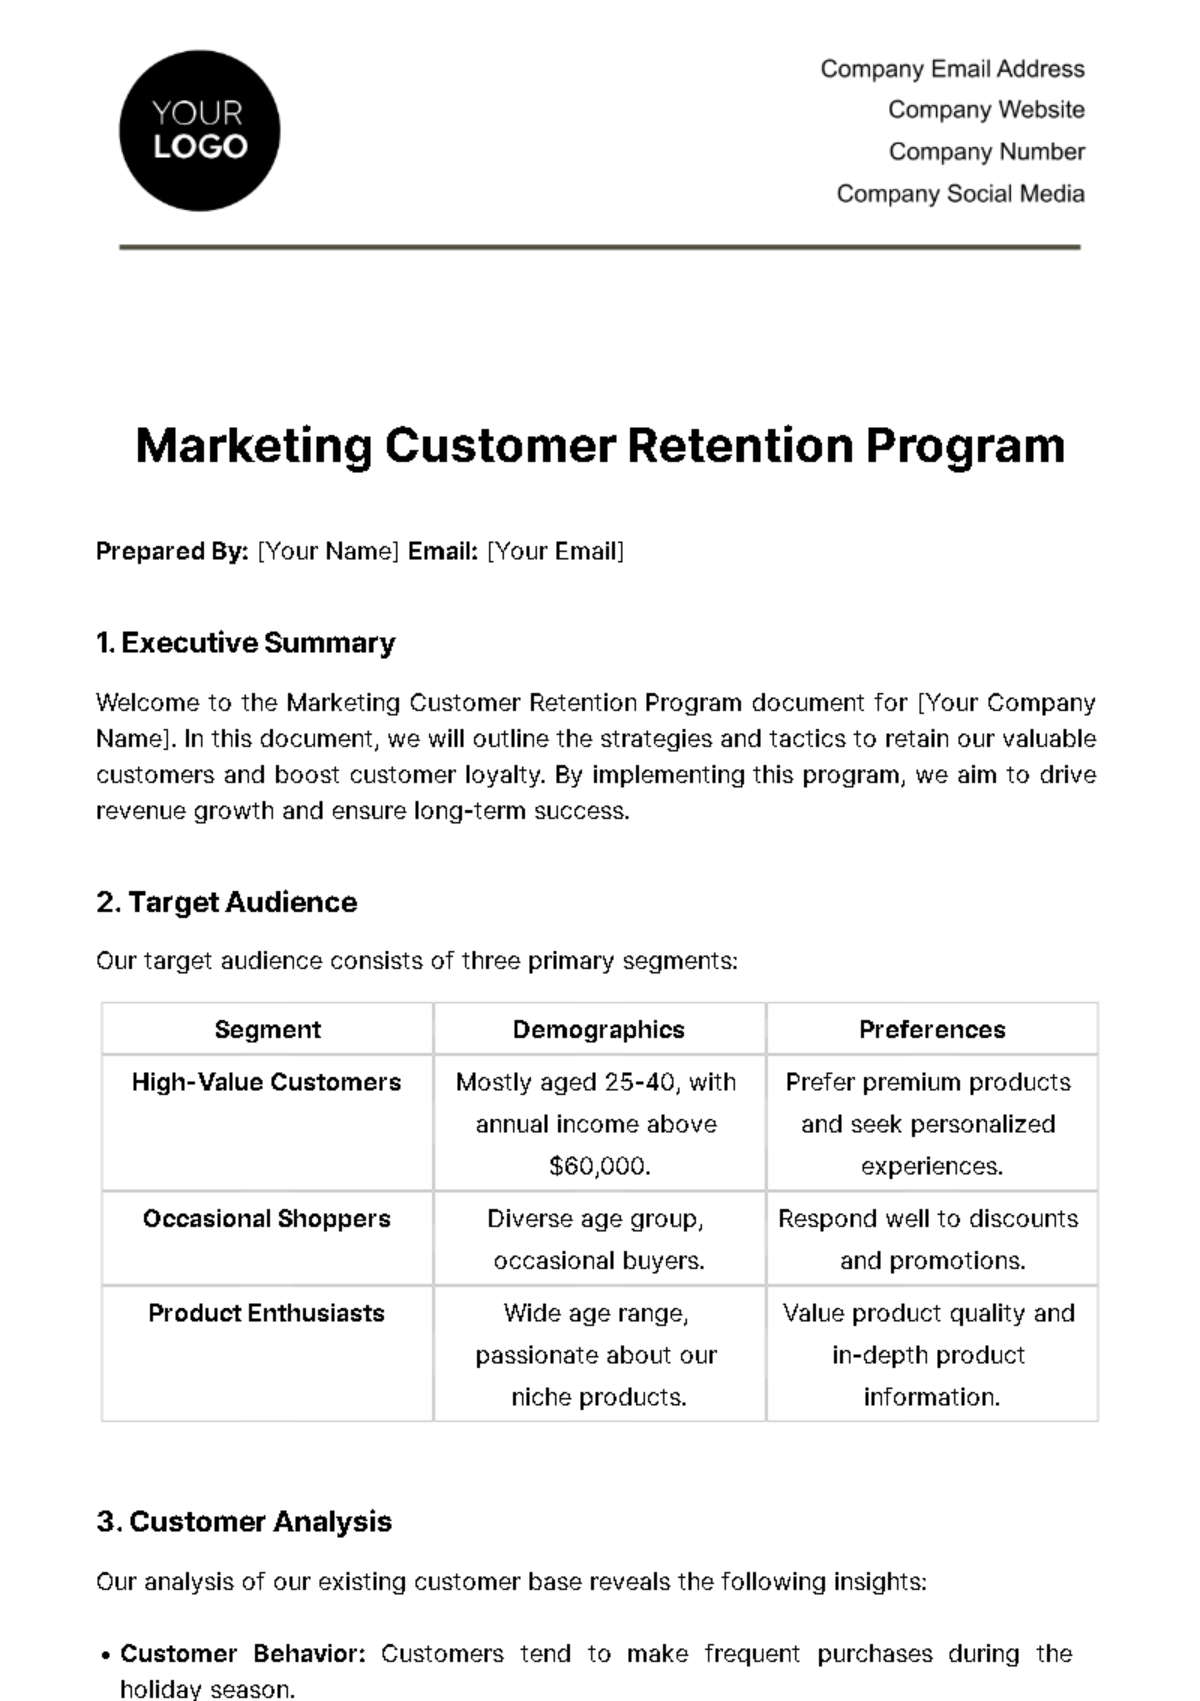 Free Marketing Customer Retention Program Template